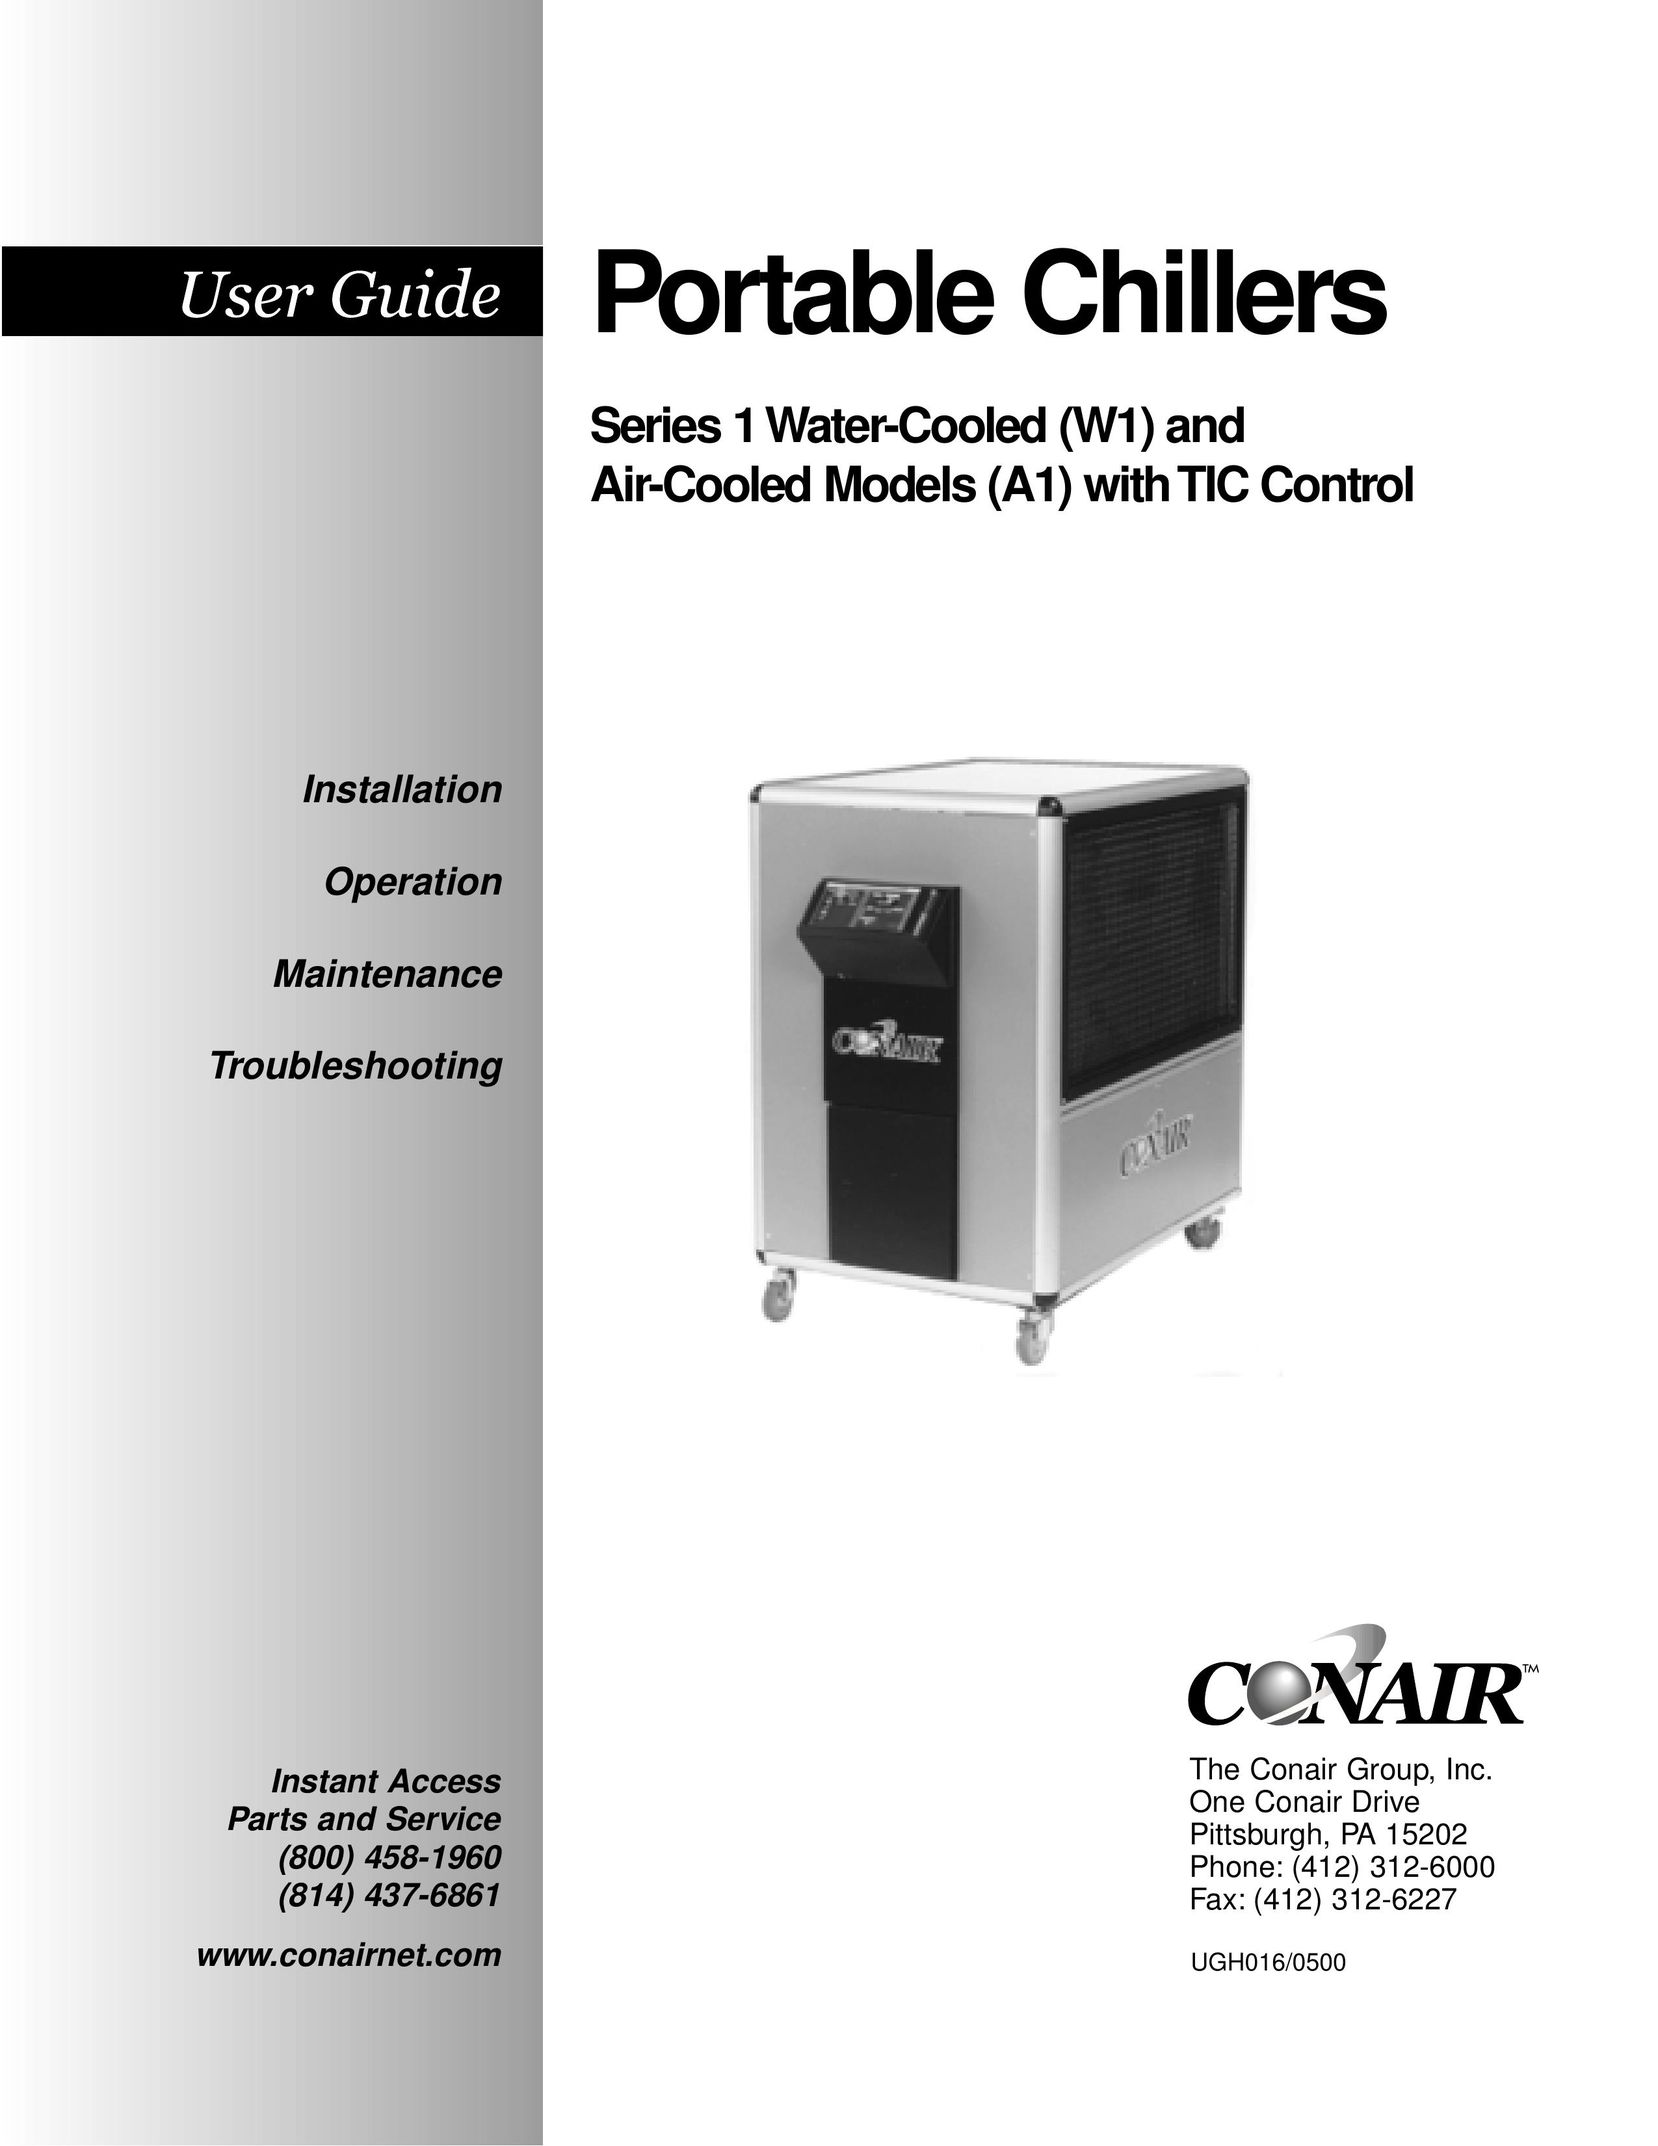 Conair UGH016/0500 Air Conditioner User Manual